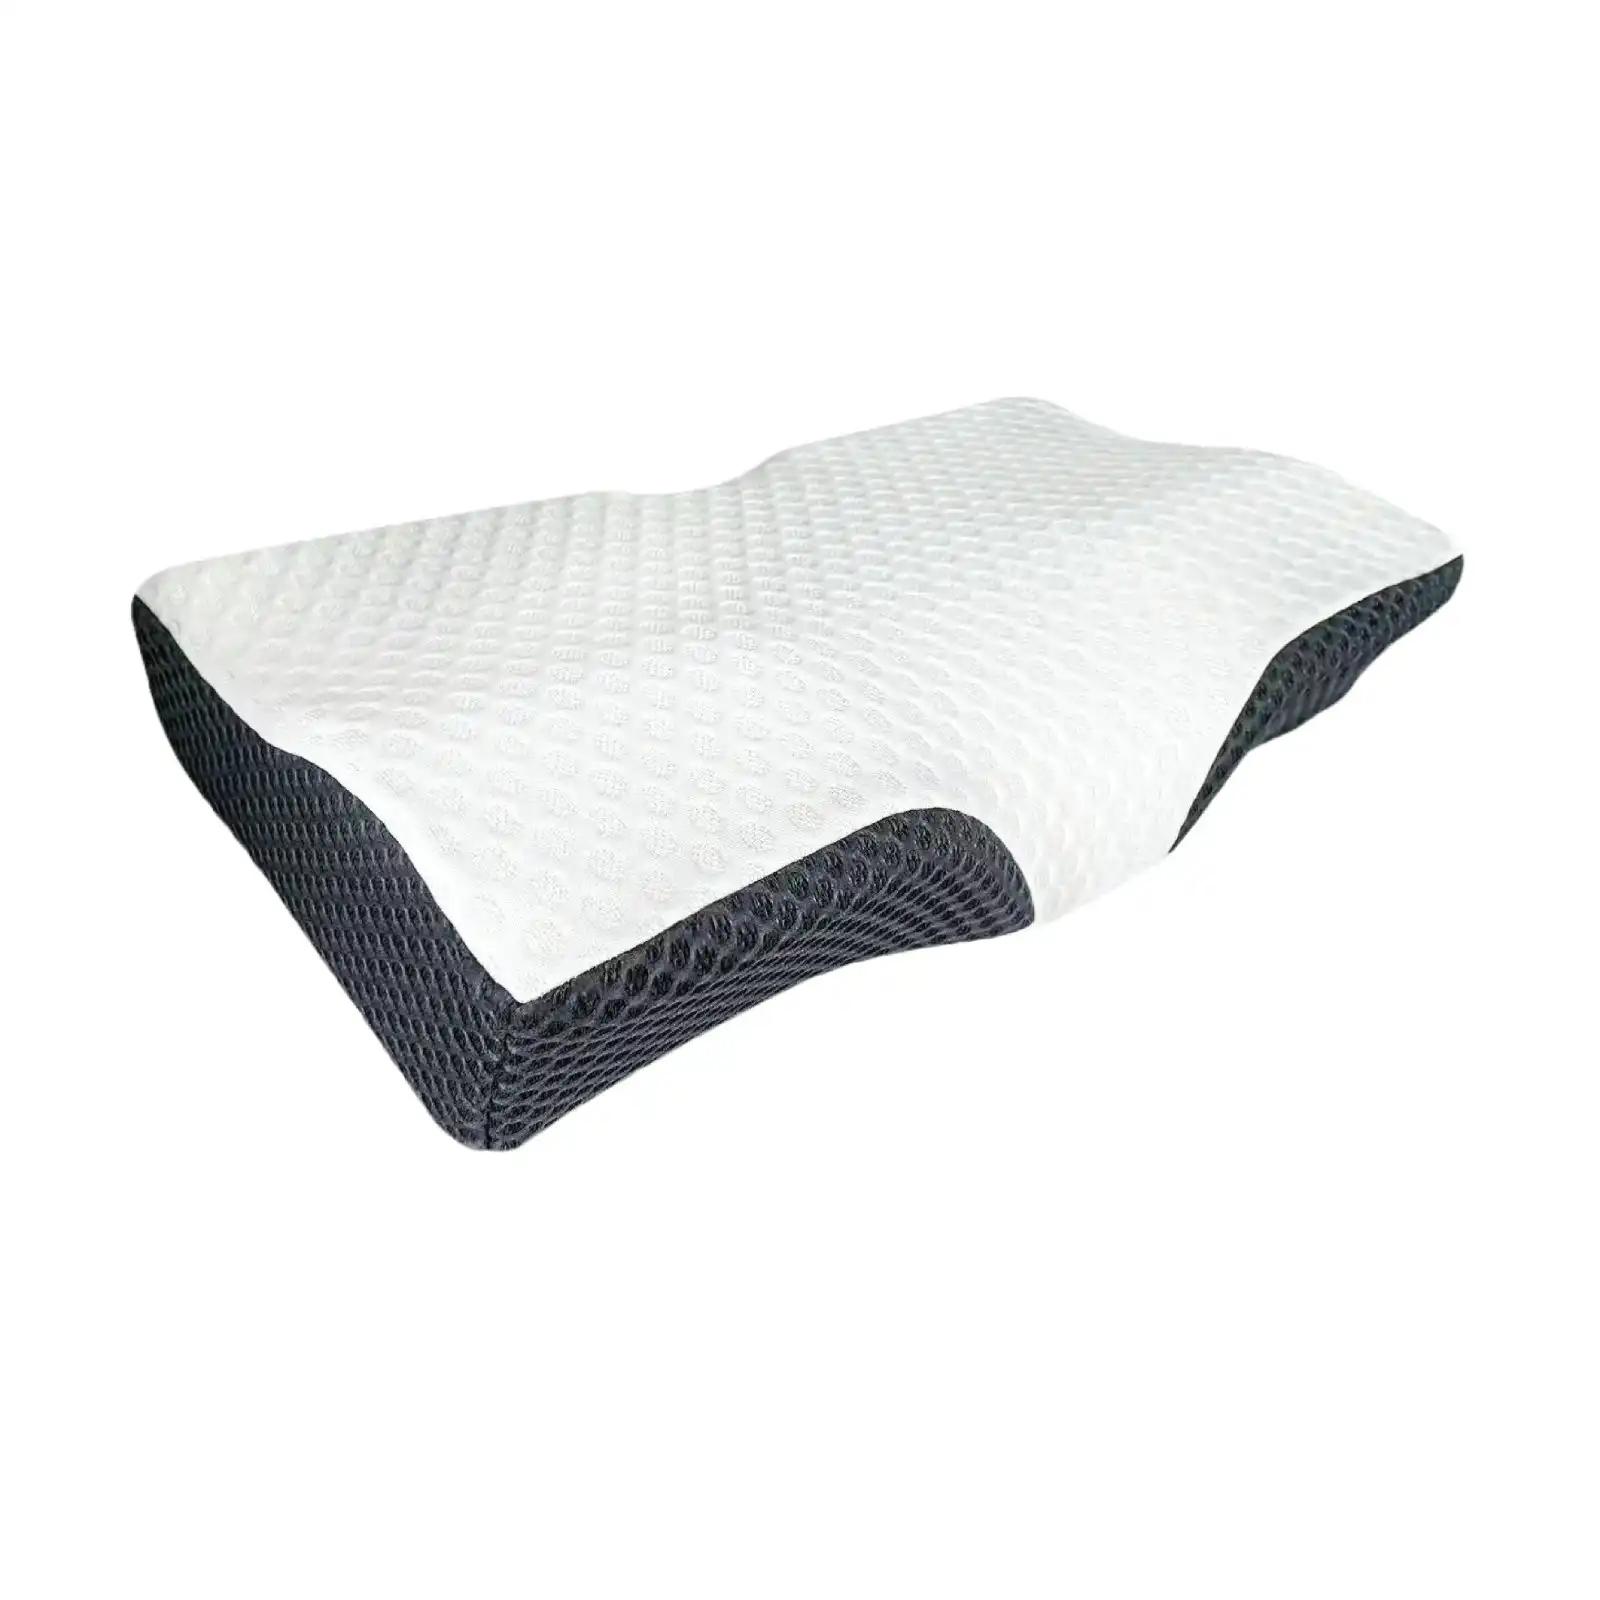 Vistara Sounds Sleep Memory Foam Cervical neck pillow